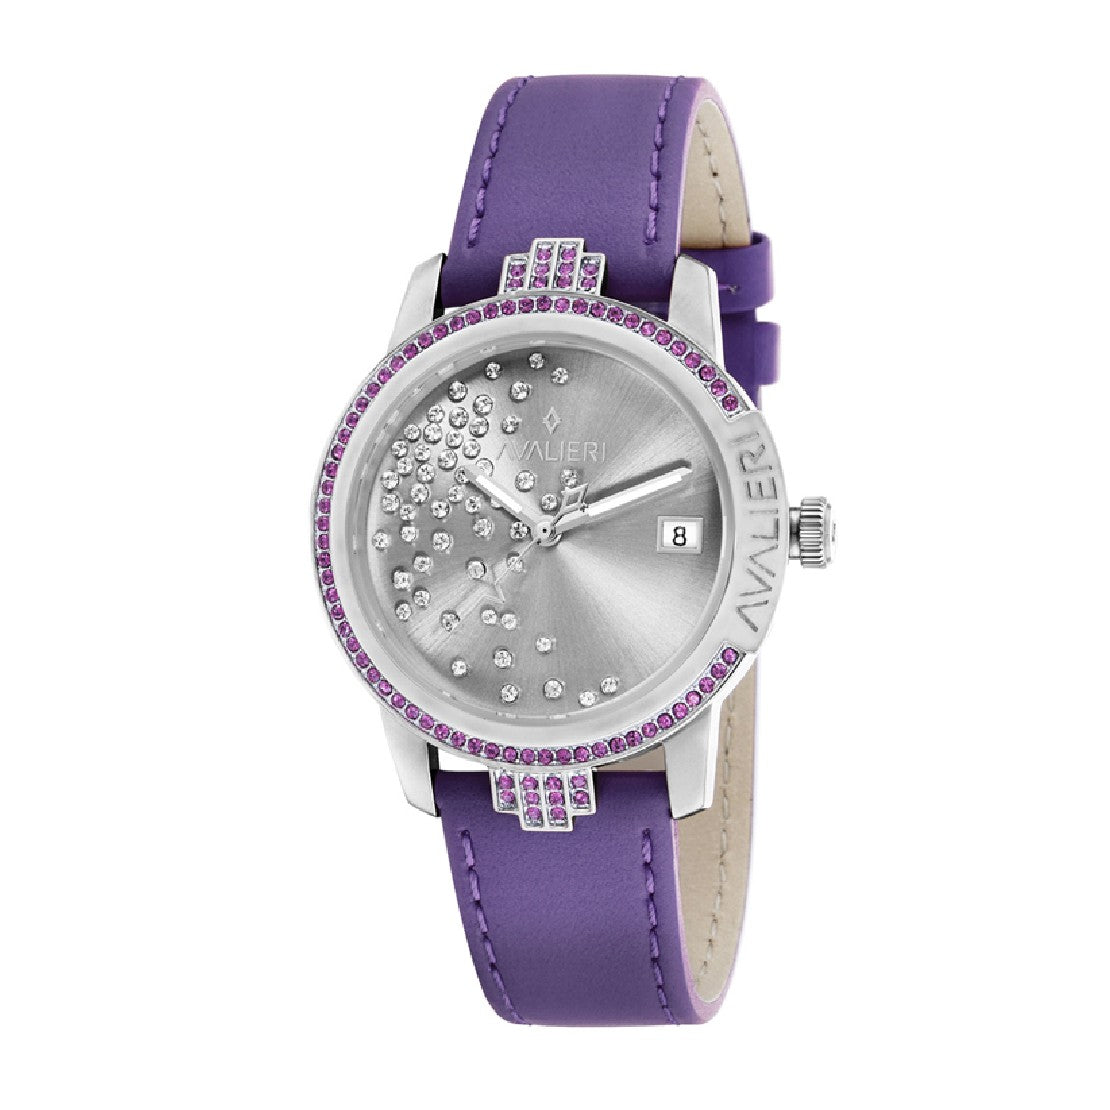 Avalieri Women's Quartz Watch With Silver White Dial - AV-2270B